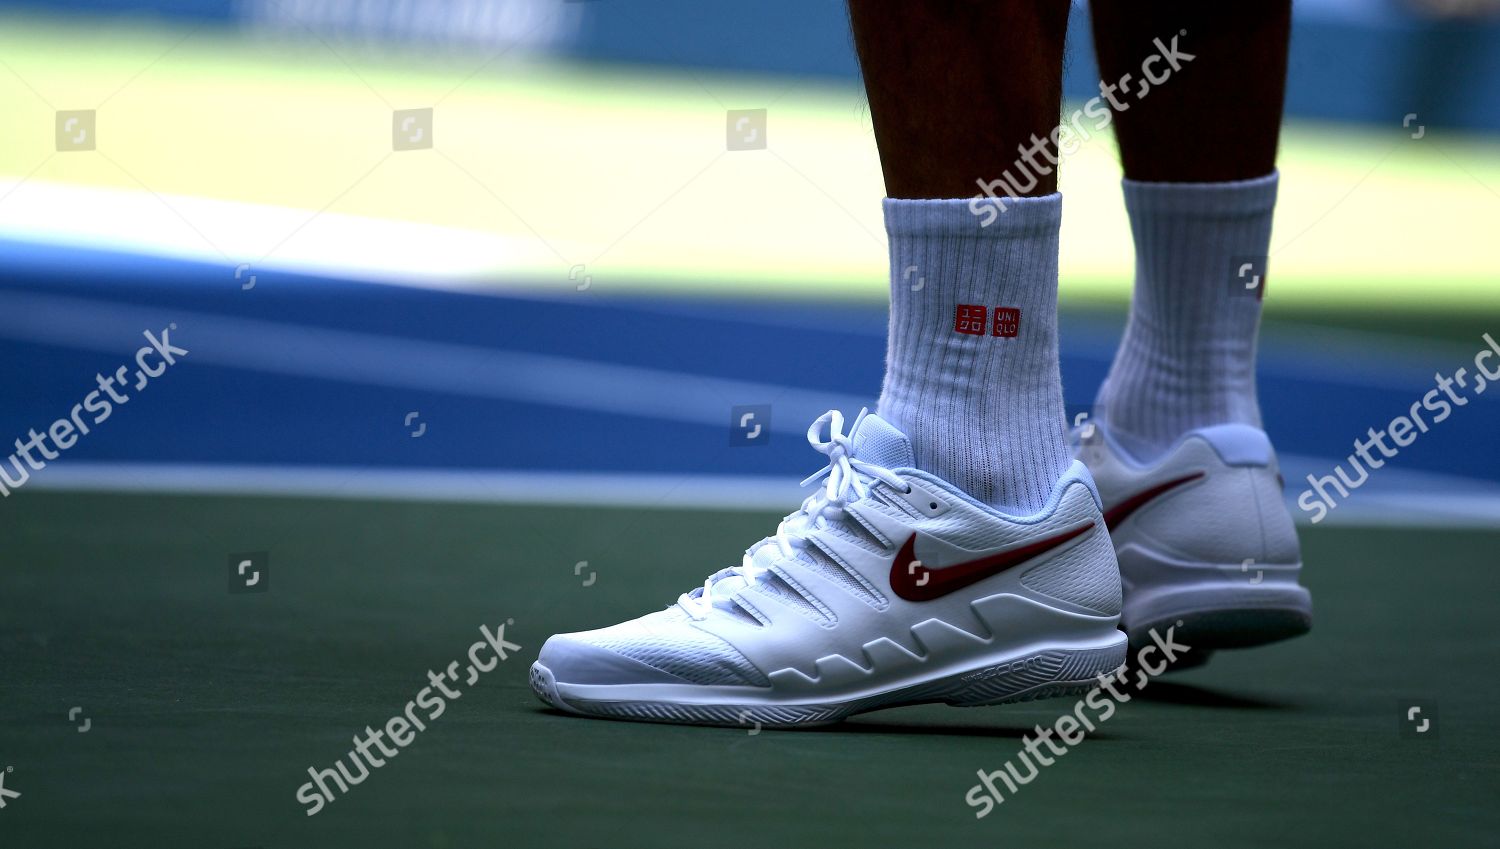 Nike Tennis Shoes Uniqlo Socks Roger Editorial Stock Photo - Stock Image |  Shutterstock